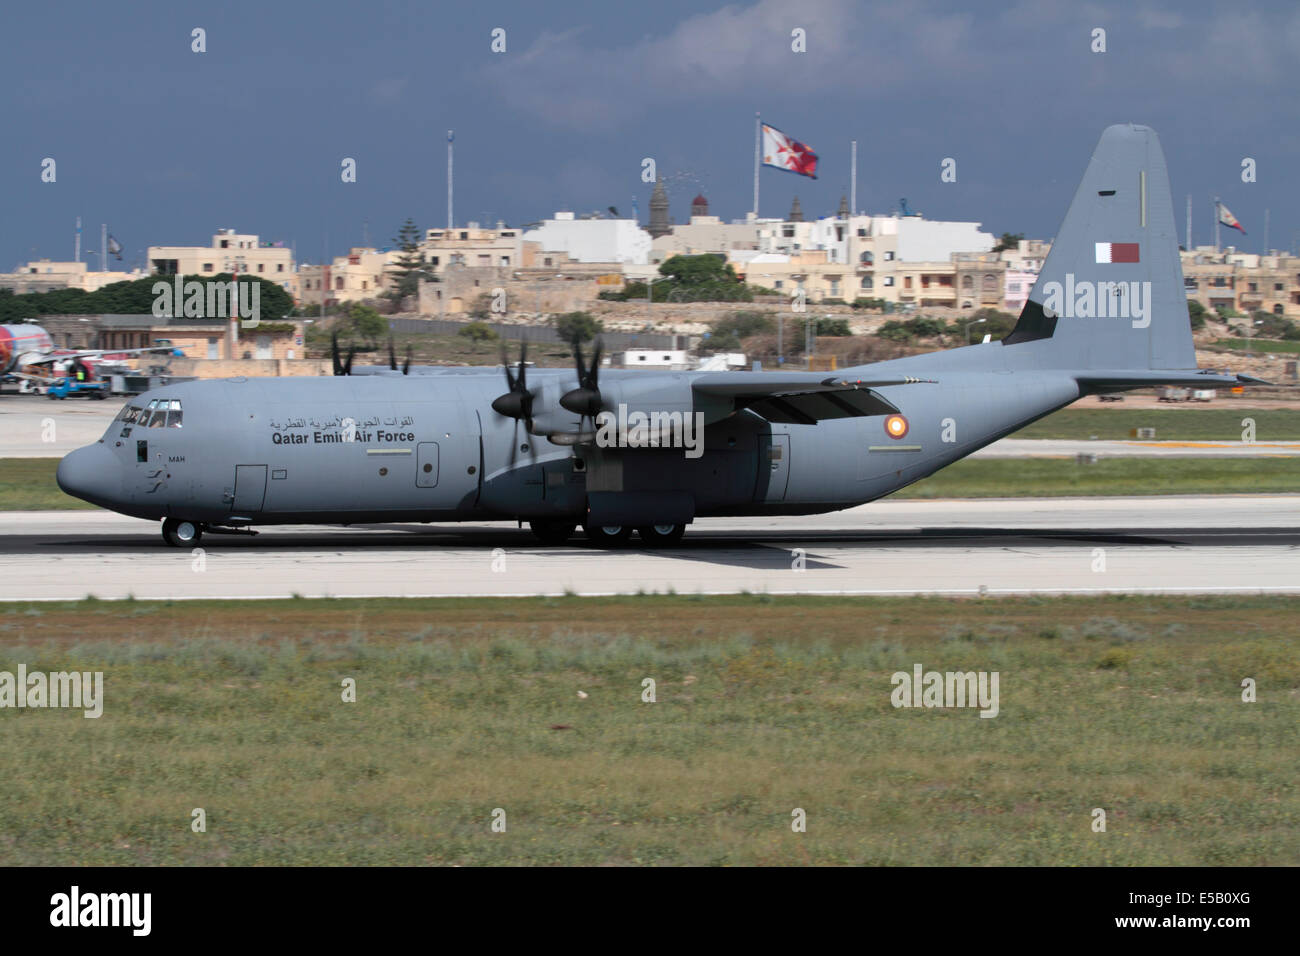 Lockheed Martin C-130J Hercules military cargo plane of the Qatar Emiri Air Force on the runway just after landing in Malta Stock Photo